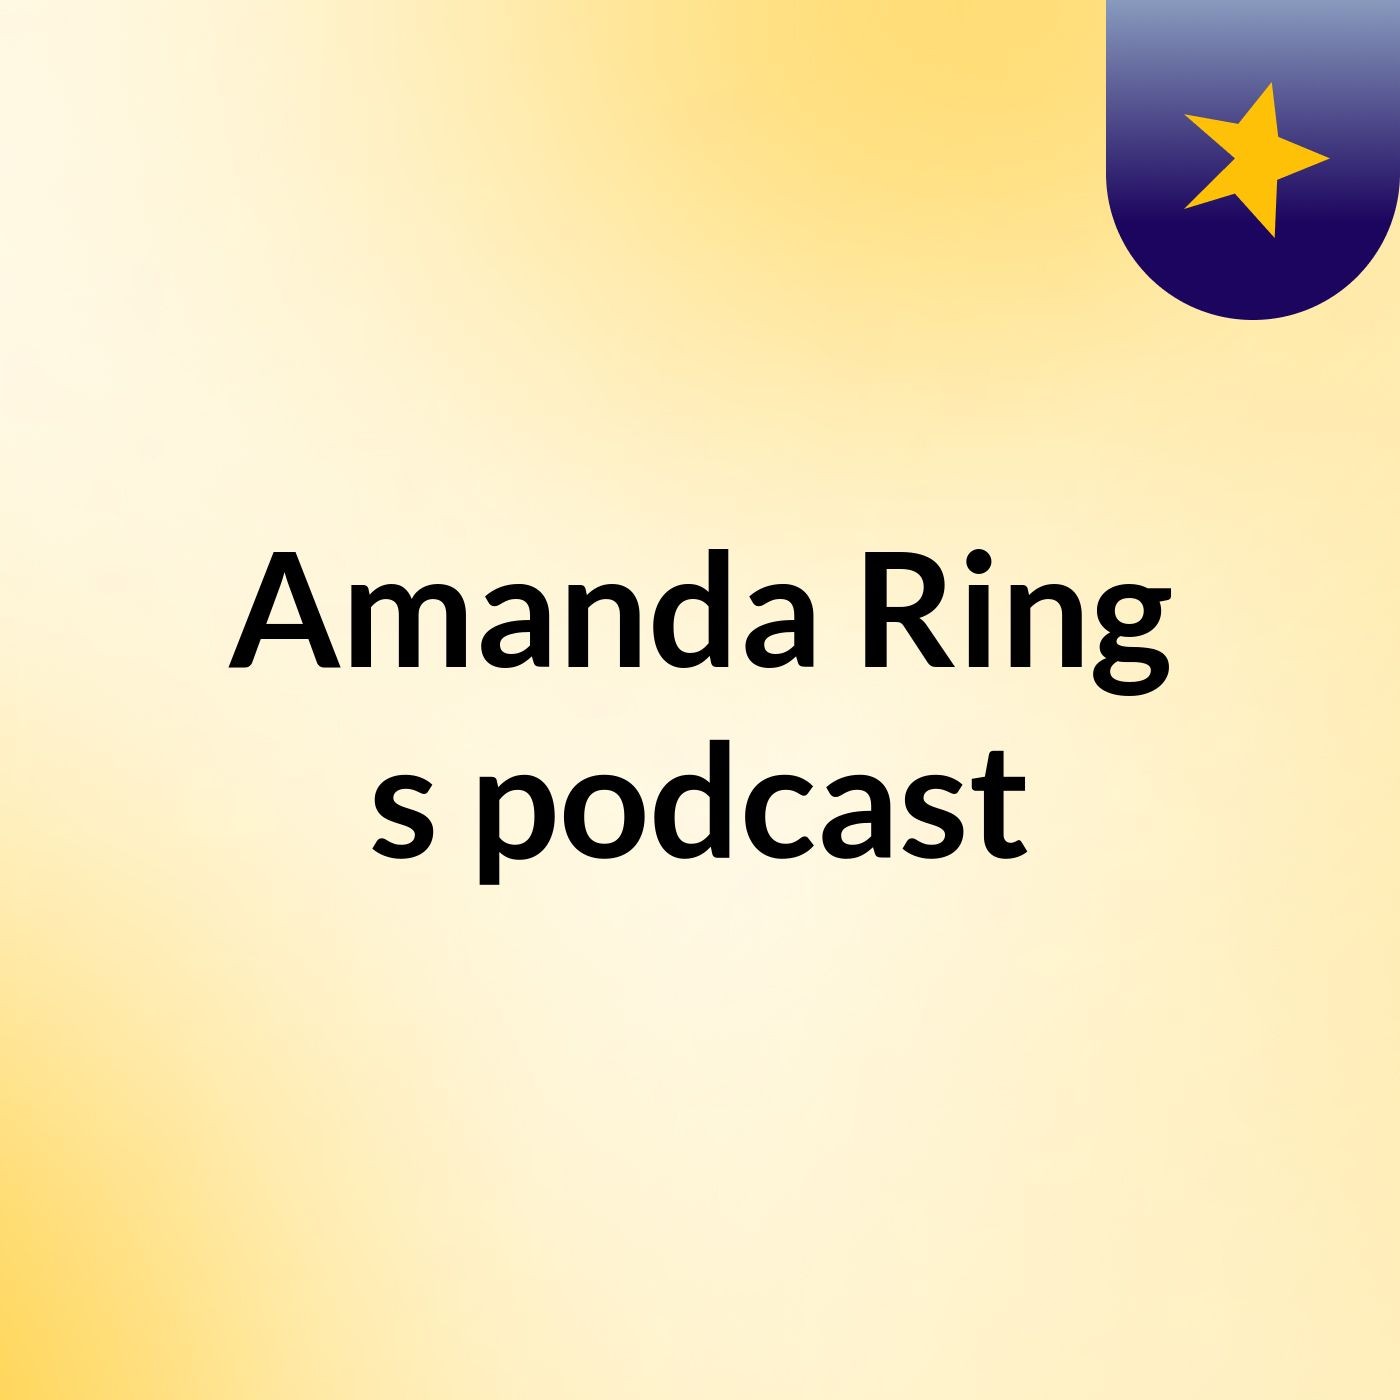 Amanda Ring's podcast